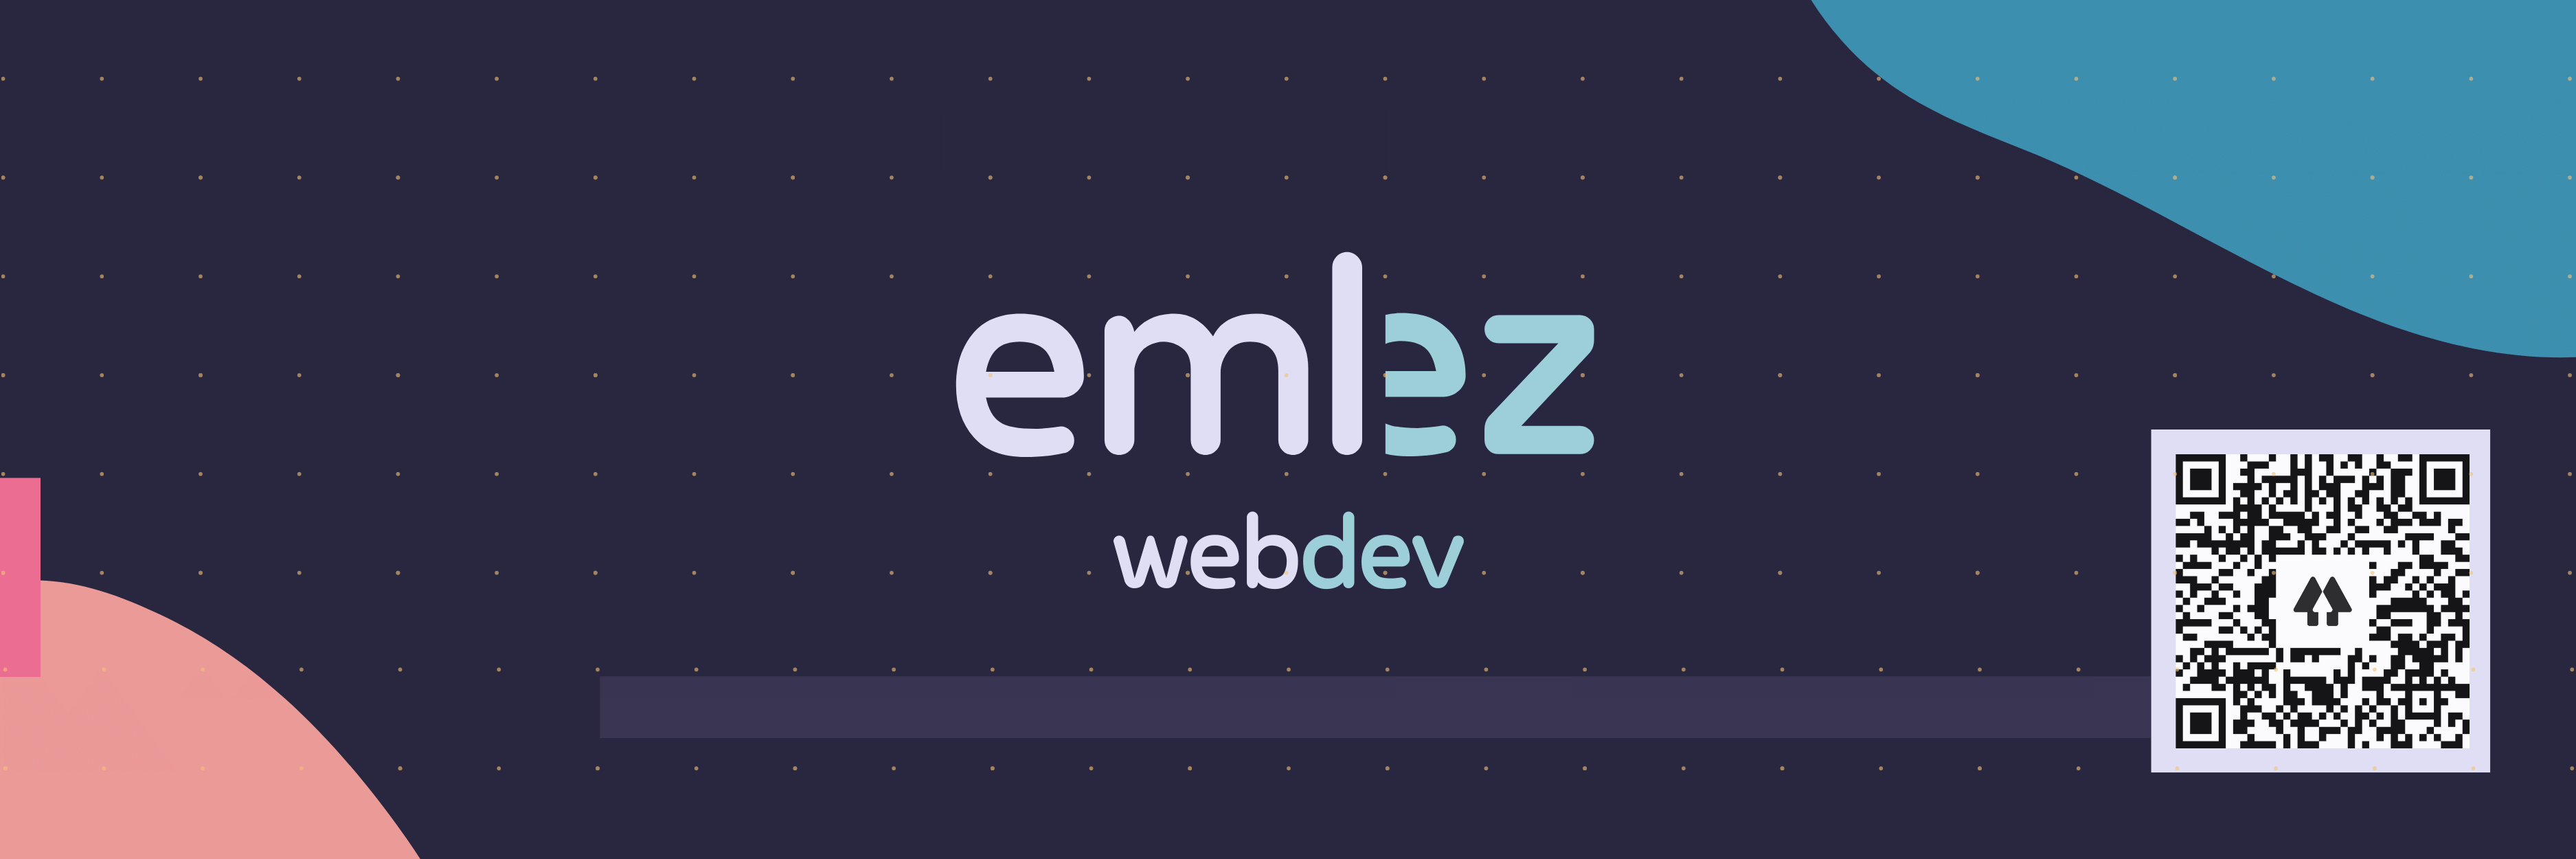 emlez.dev logo with the web developer title.